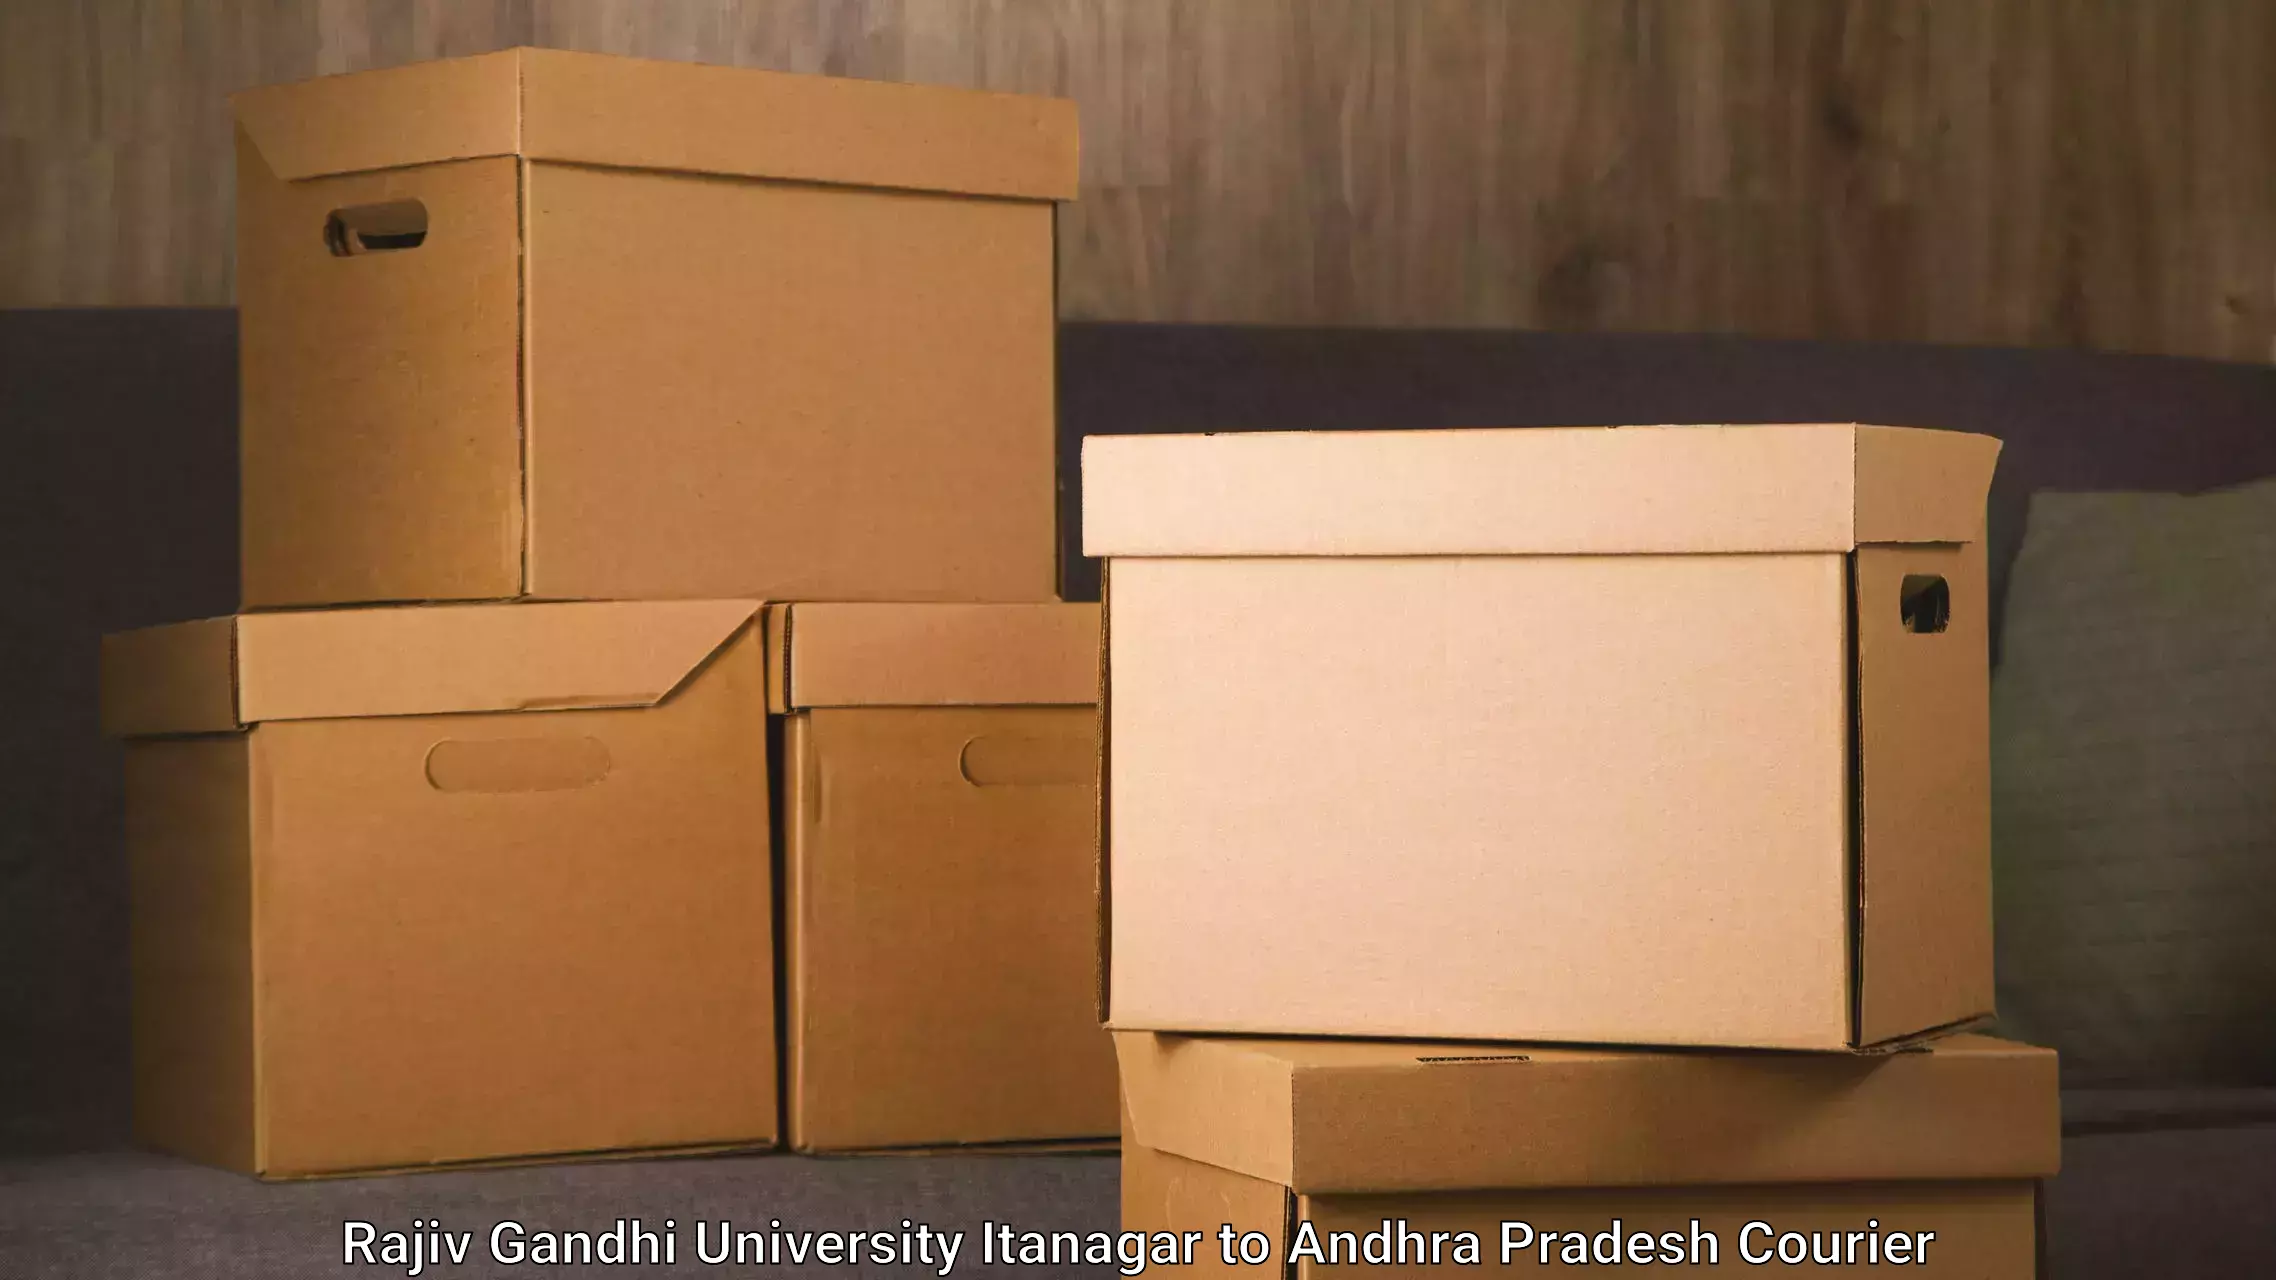 Express delivery capabilities Rajiv Gandhi University Itanagar to Alur